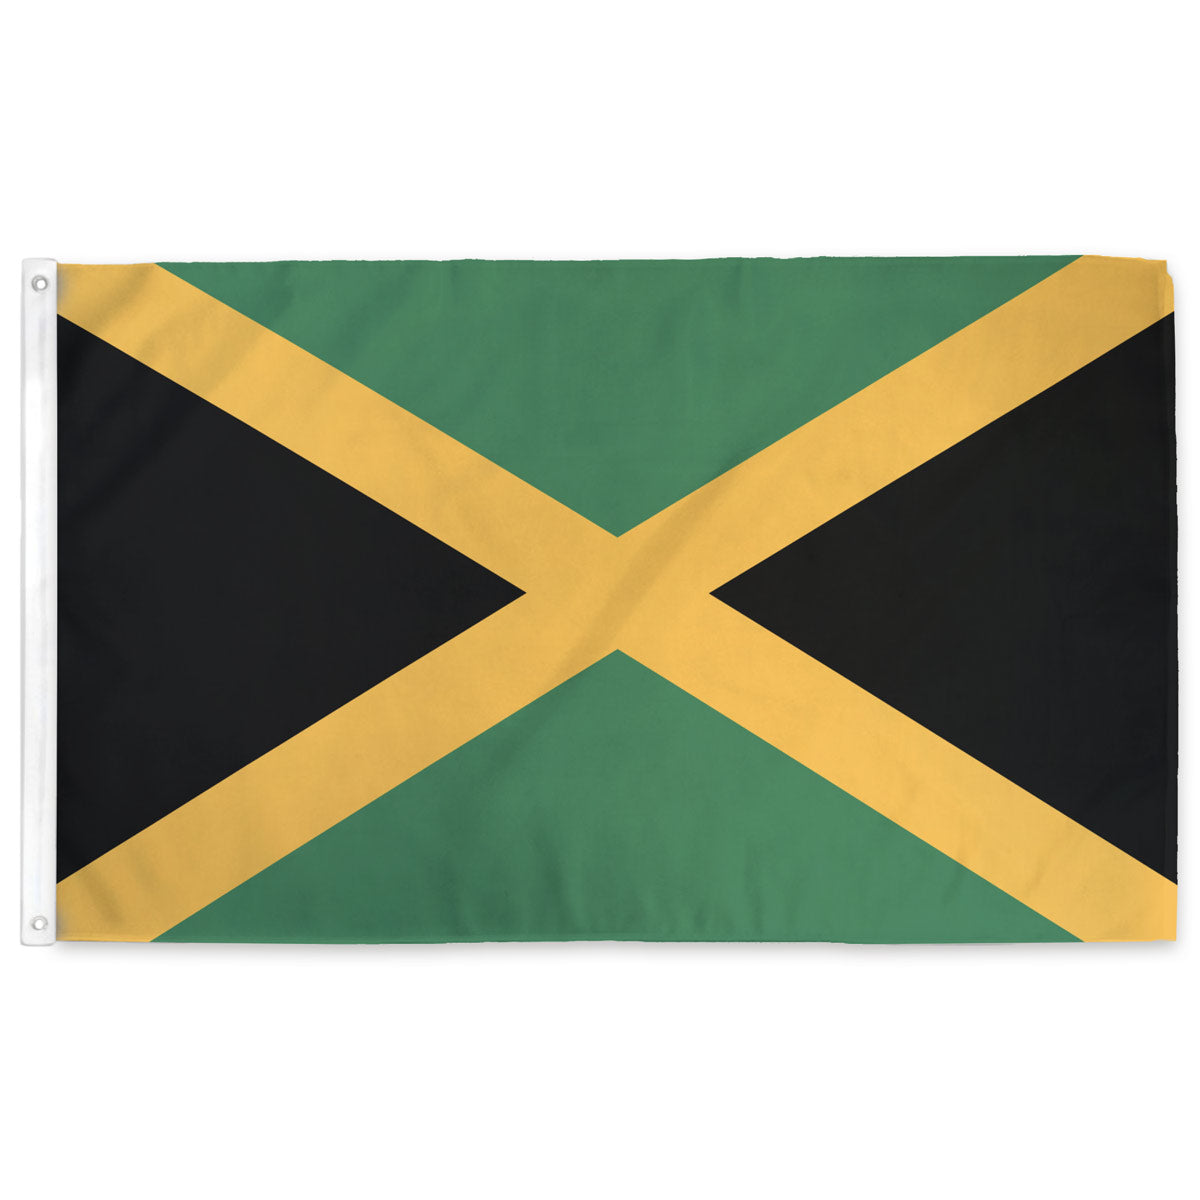 Jamaica Flag 🇯🇲